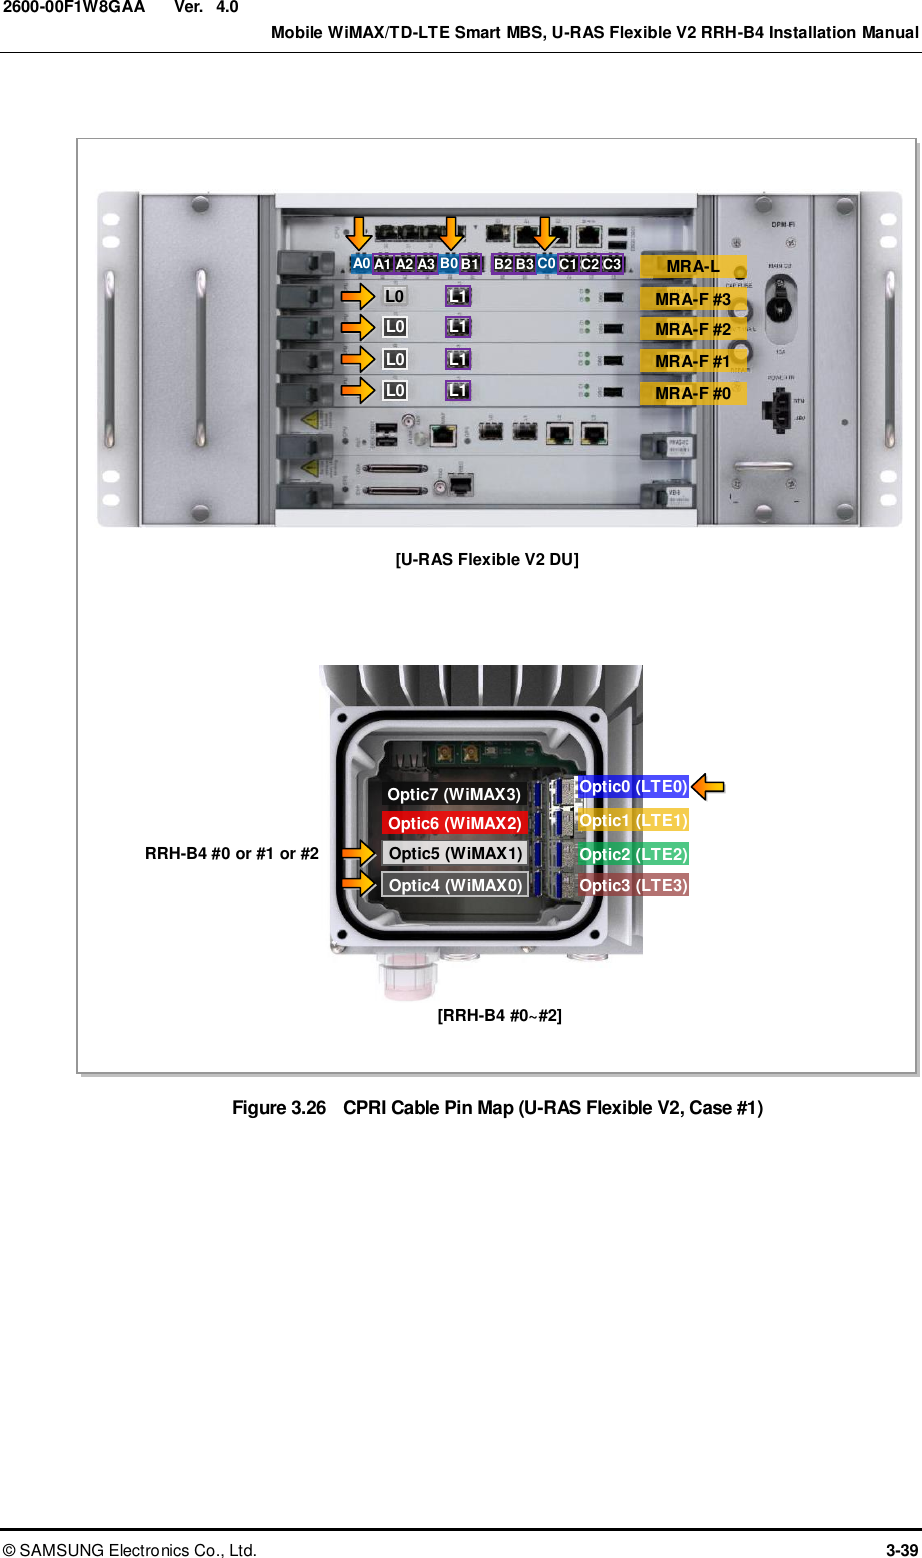  Ver.    Mobile WiMAX/TD-LTE Smart MBS, U-RAS Flexible V2 RRH-B4 Installation Manual ©  SAMSUNG Electronics Co., Ltd.  3-39 2600-00F1W8GAA 4.0  Figure 3.26  CPRI Cable Pin Map (U-RAS Flexible V2, Case #1)  [U-RAS Flexible V2 DU] Optic0 (LTE0) Optic1 (LTE1) Optic2 (LTE2) Optic3 (LTE3) [RRH-B4 #0~#2] RRH-B4 #0 or #1 or #2 MRA-L MRA-F #3 MRA-F #2 MRA-F #1 MRA-F #0 Optic4 (WiMAX0) Optic6 (WiMAX2) Optic5 (WiMAX1) Optic7 (WiMAX3) L0 L0 L1 L0 L1 L0 L1 L1 A0 A1 A2 A3 B0 B1 B2 B3 C0 C1 C2 C3 